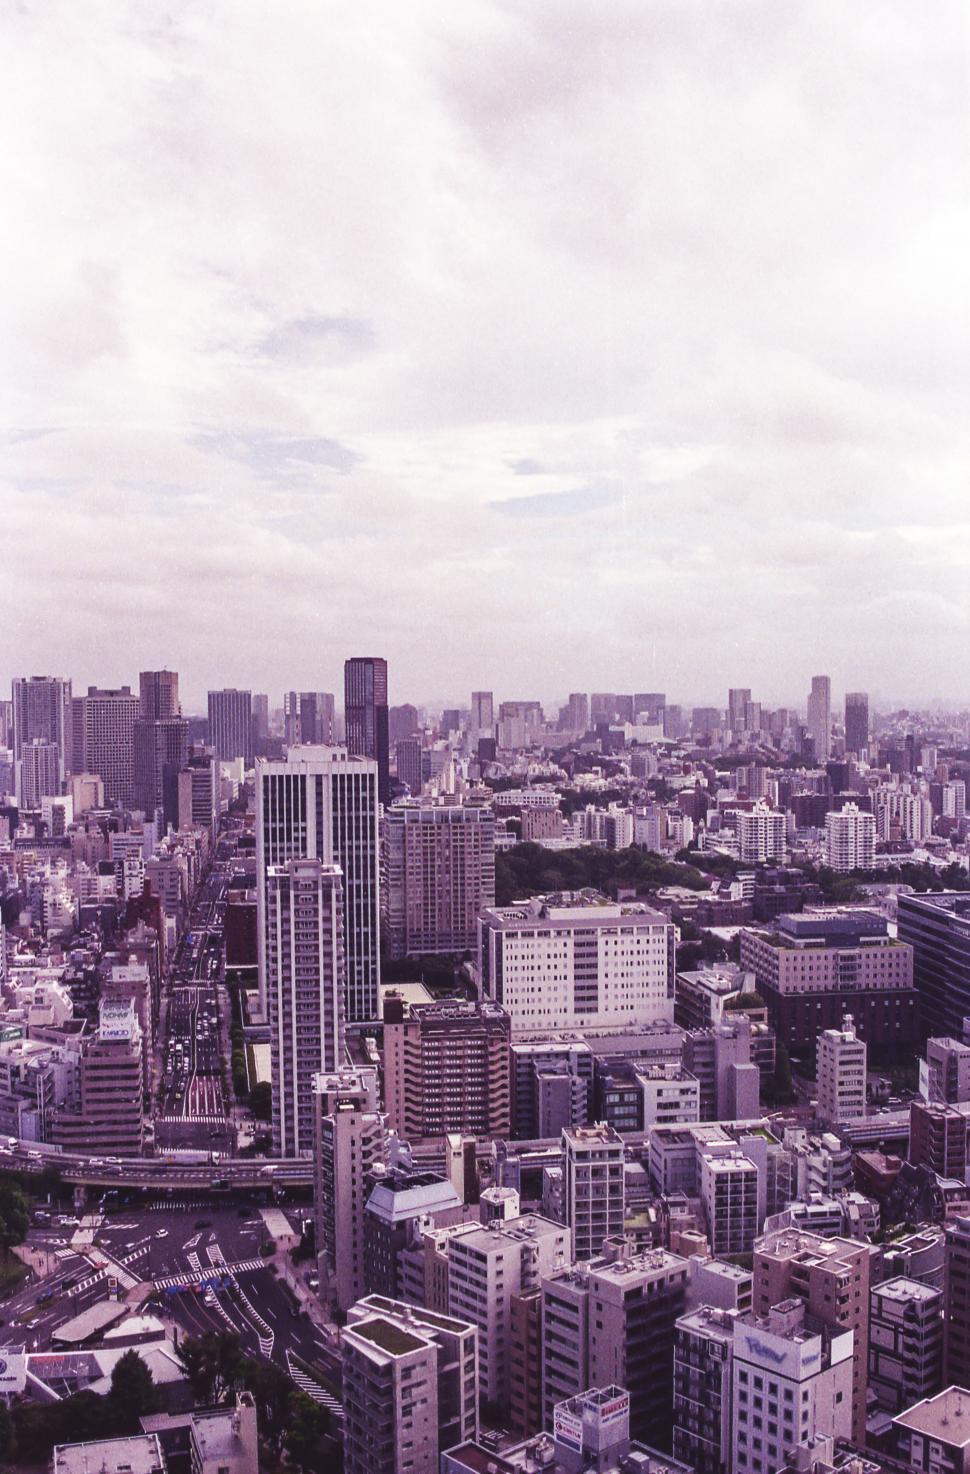 Free Image of Skyscrapers of Tokyo, Japan 